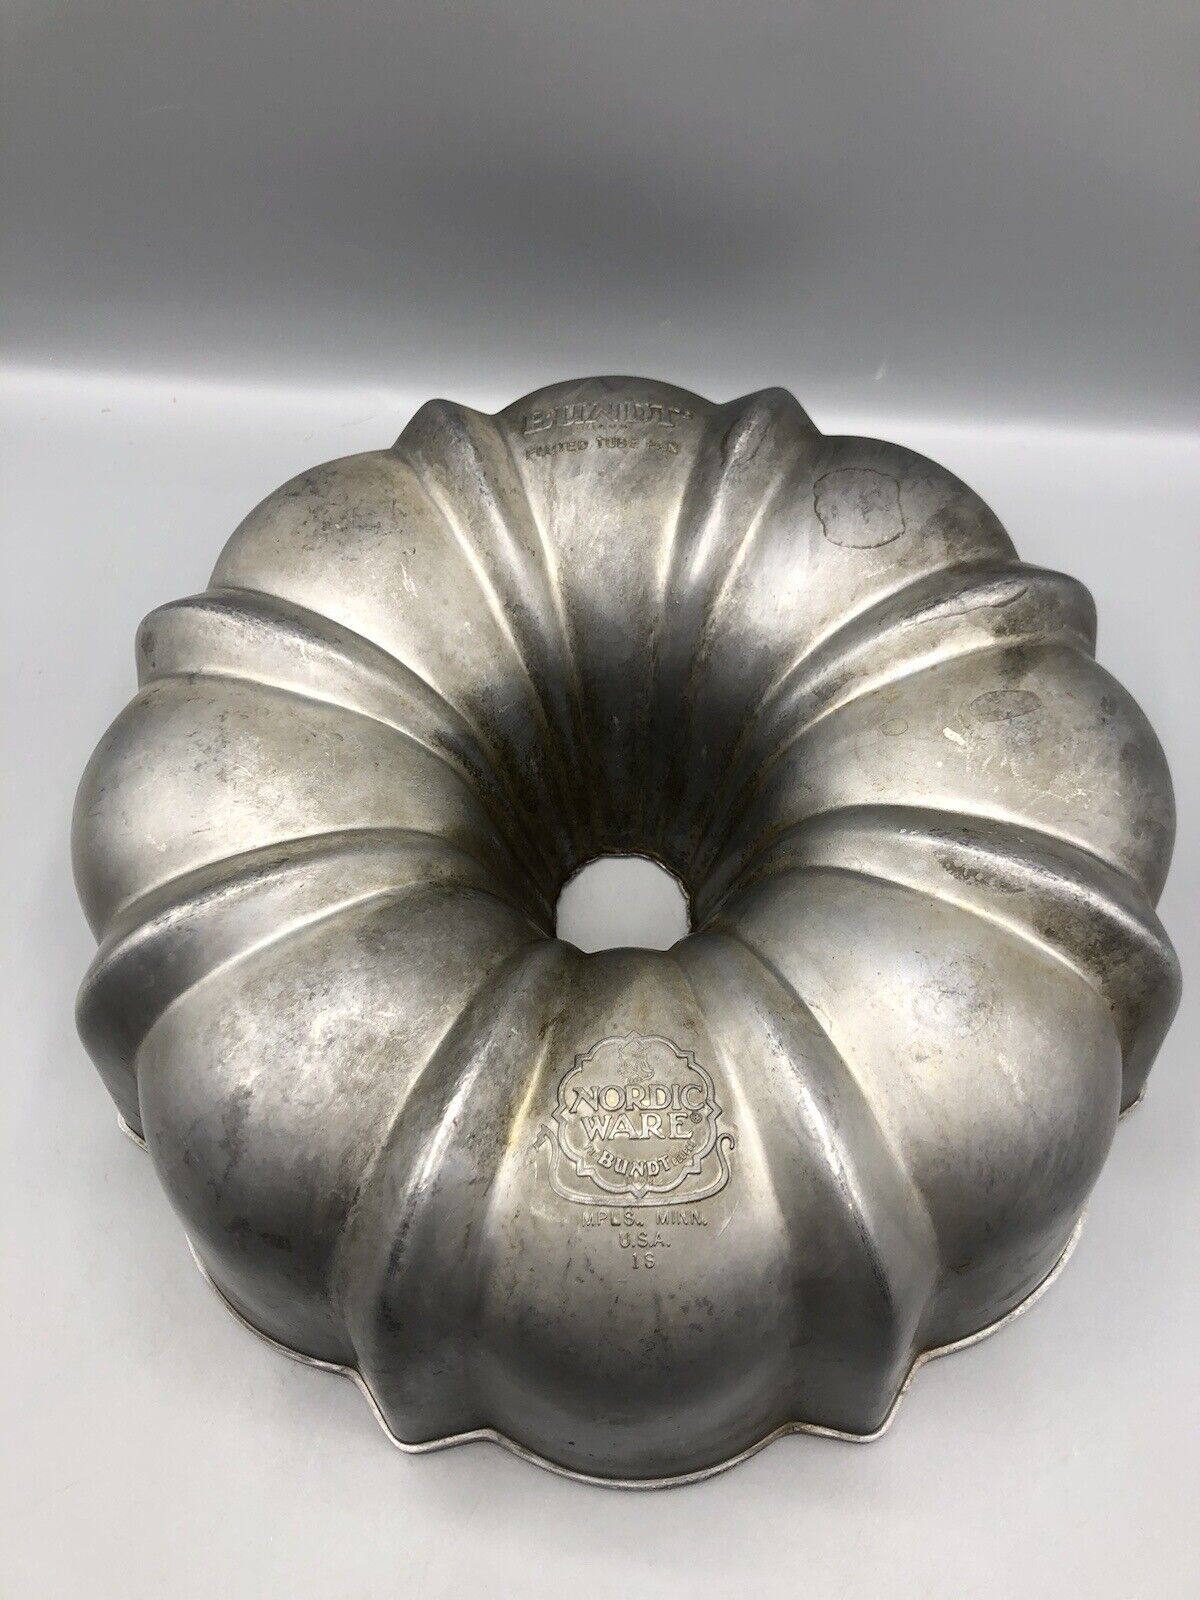 Vintage Original Bundt Cake Pan Heavy Cast Aluminum Nordic Ware USA